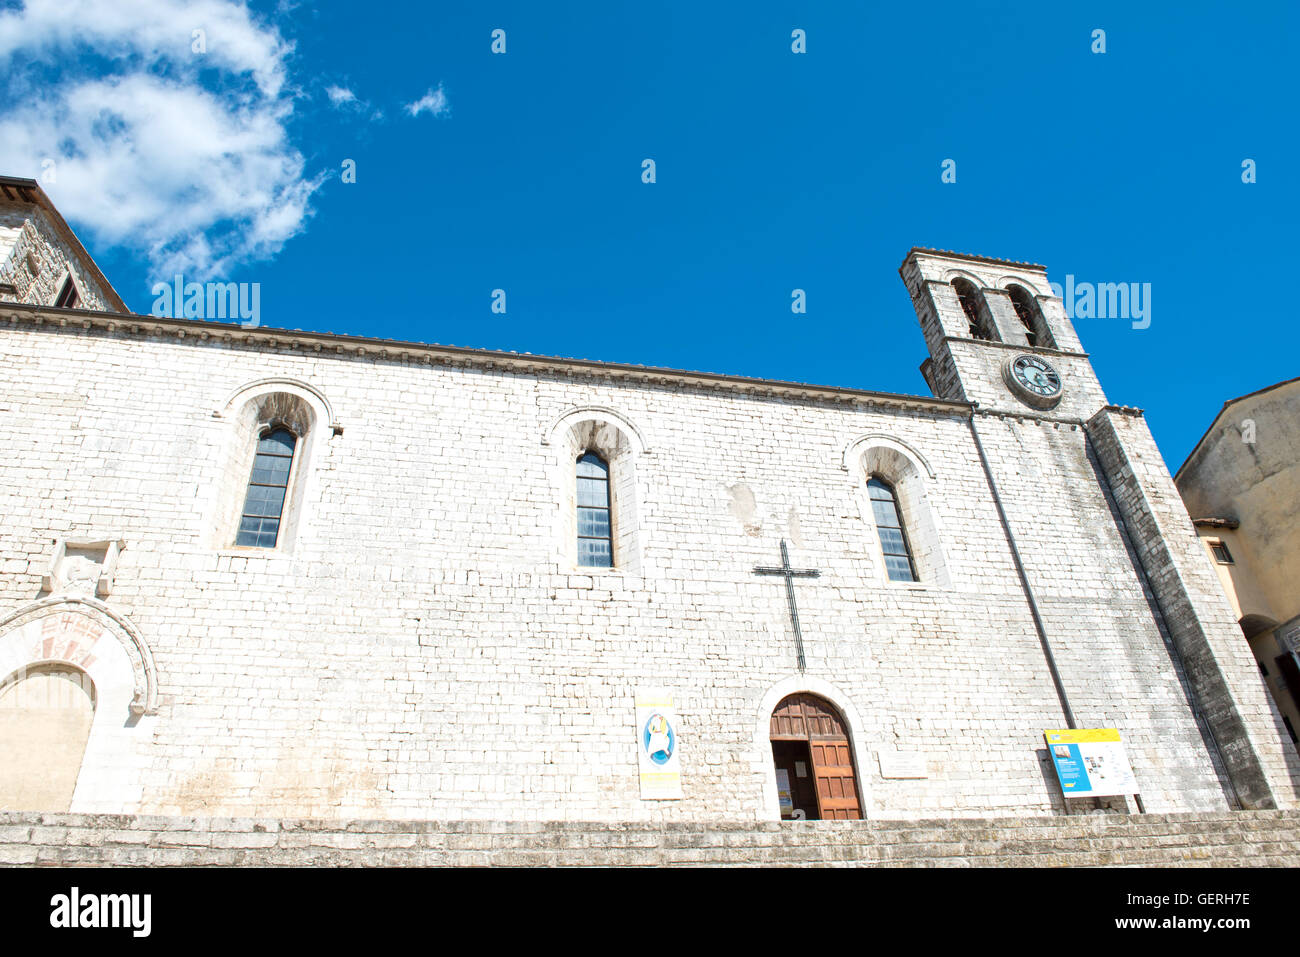 PIEDILUCO, Umbrien, Italien - 17. Juli 2016 - Blick von der Kirche des Hl. Franziskus in Piediluco, Terni, Umbrien, Italien, Europa Stockfoto